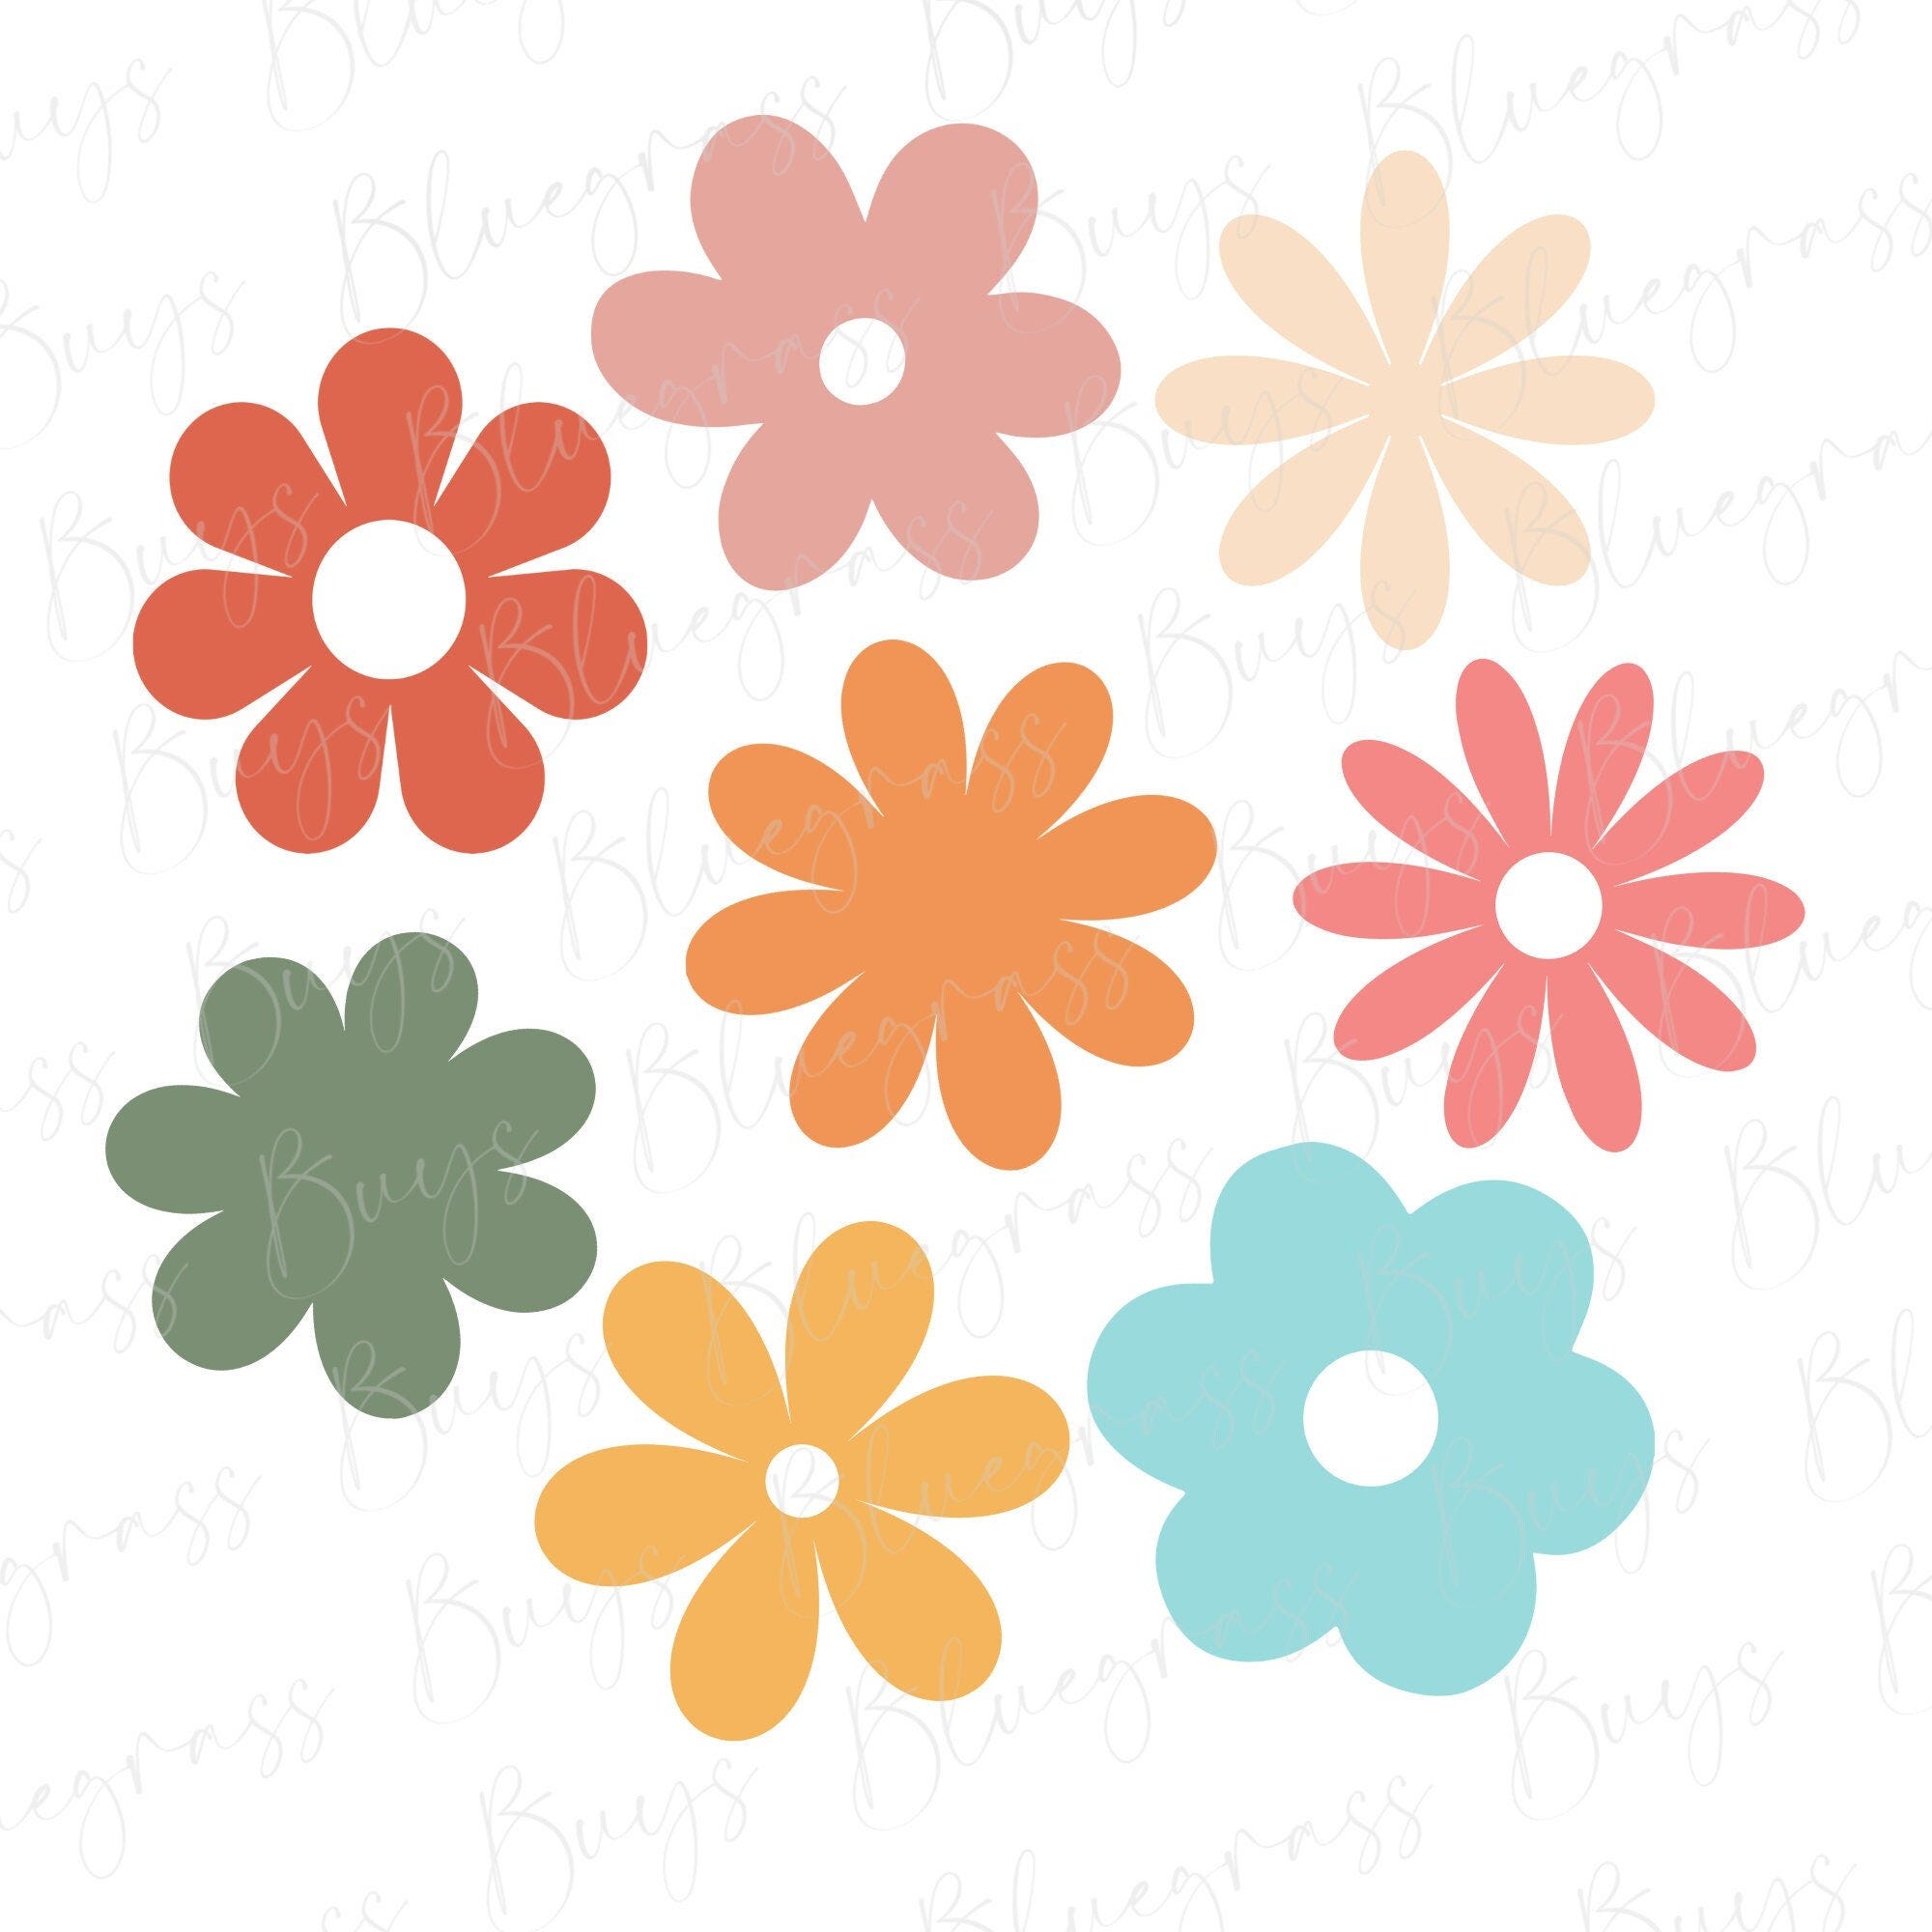 Retro Flowers SVG, Flower Clipart, Daisy Flower Cut File, Digital Download, Cricut, Silhouette Cut File